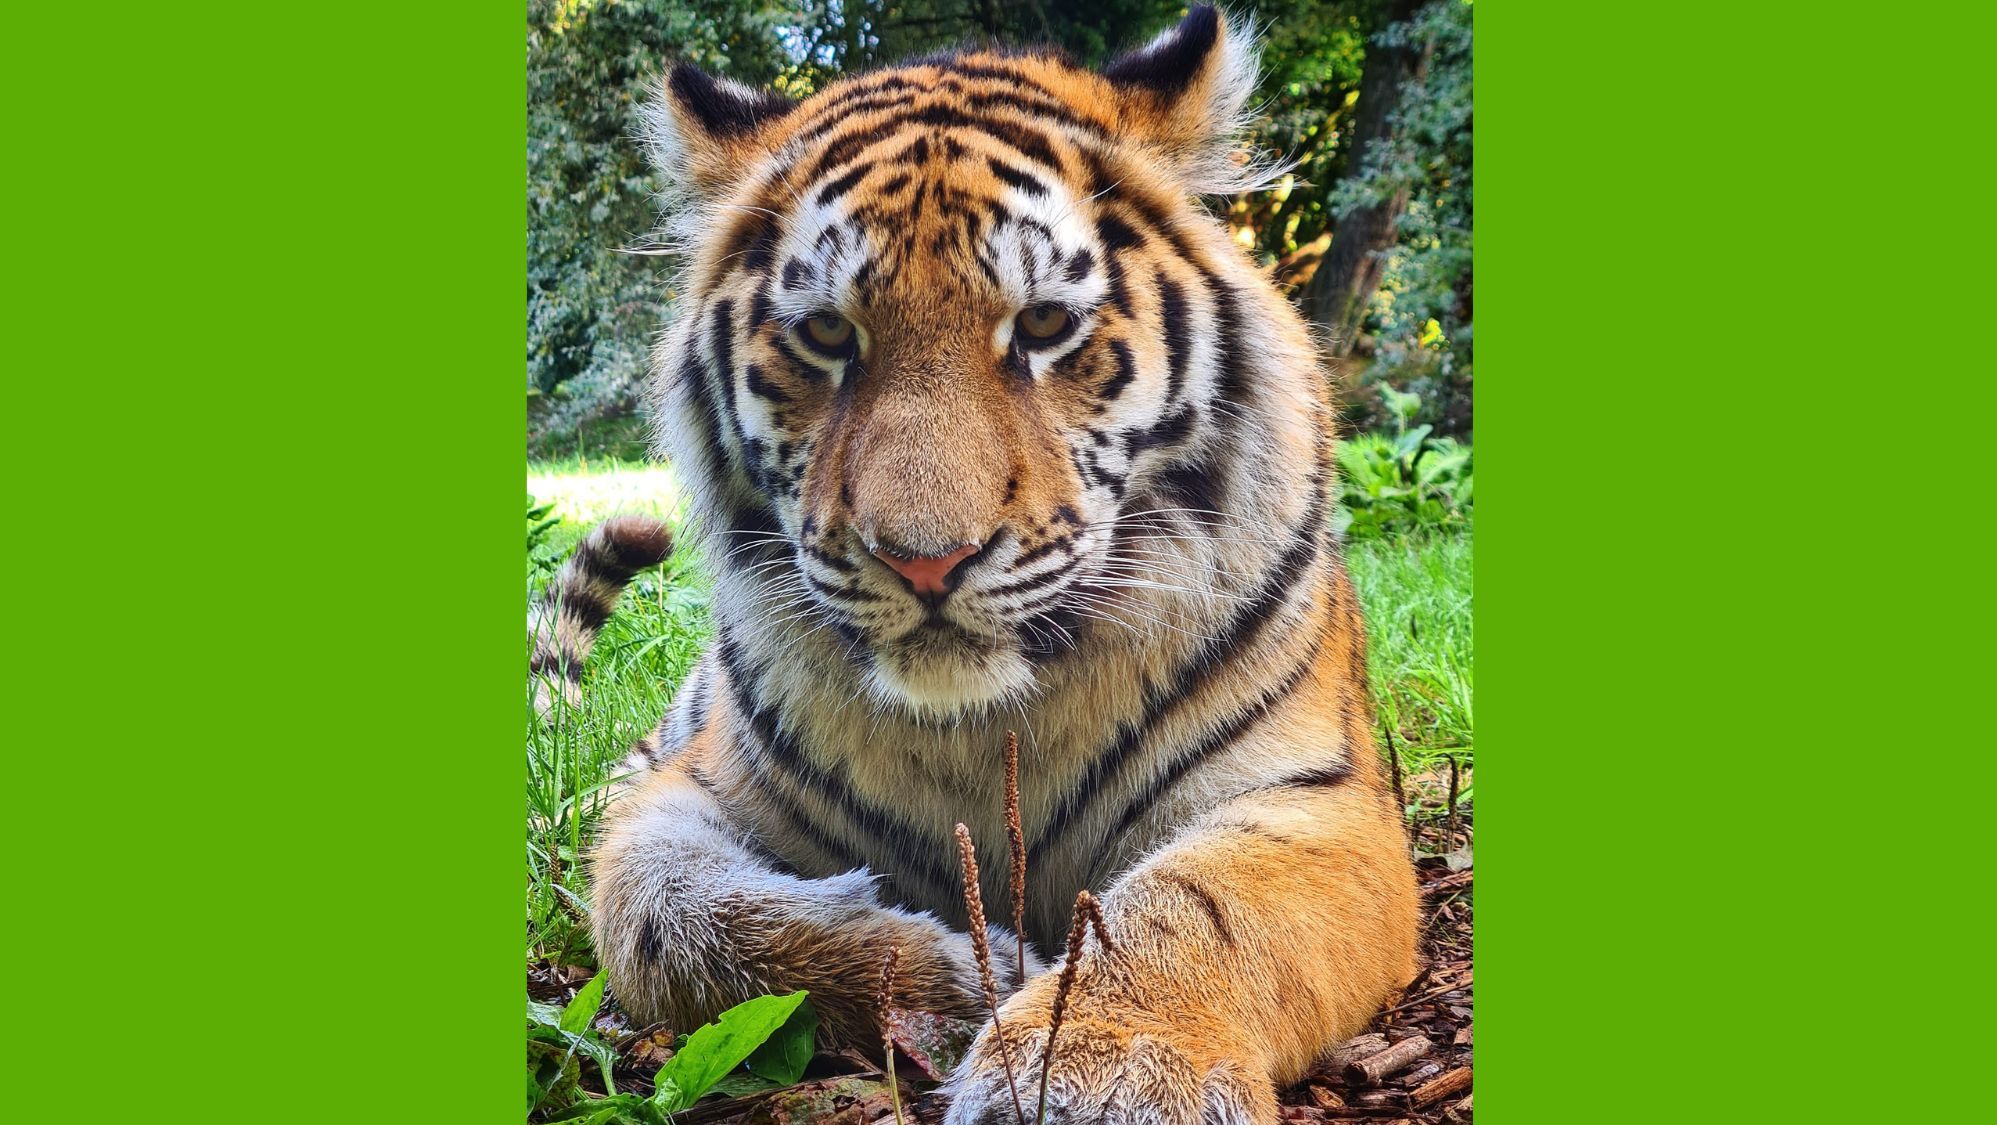 Banham Zoo tiger moves to Swedish zoo